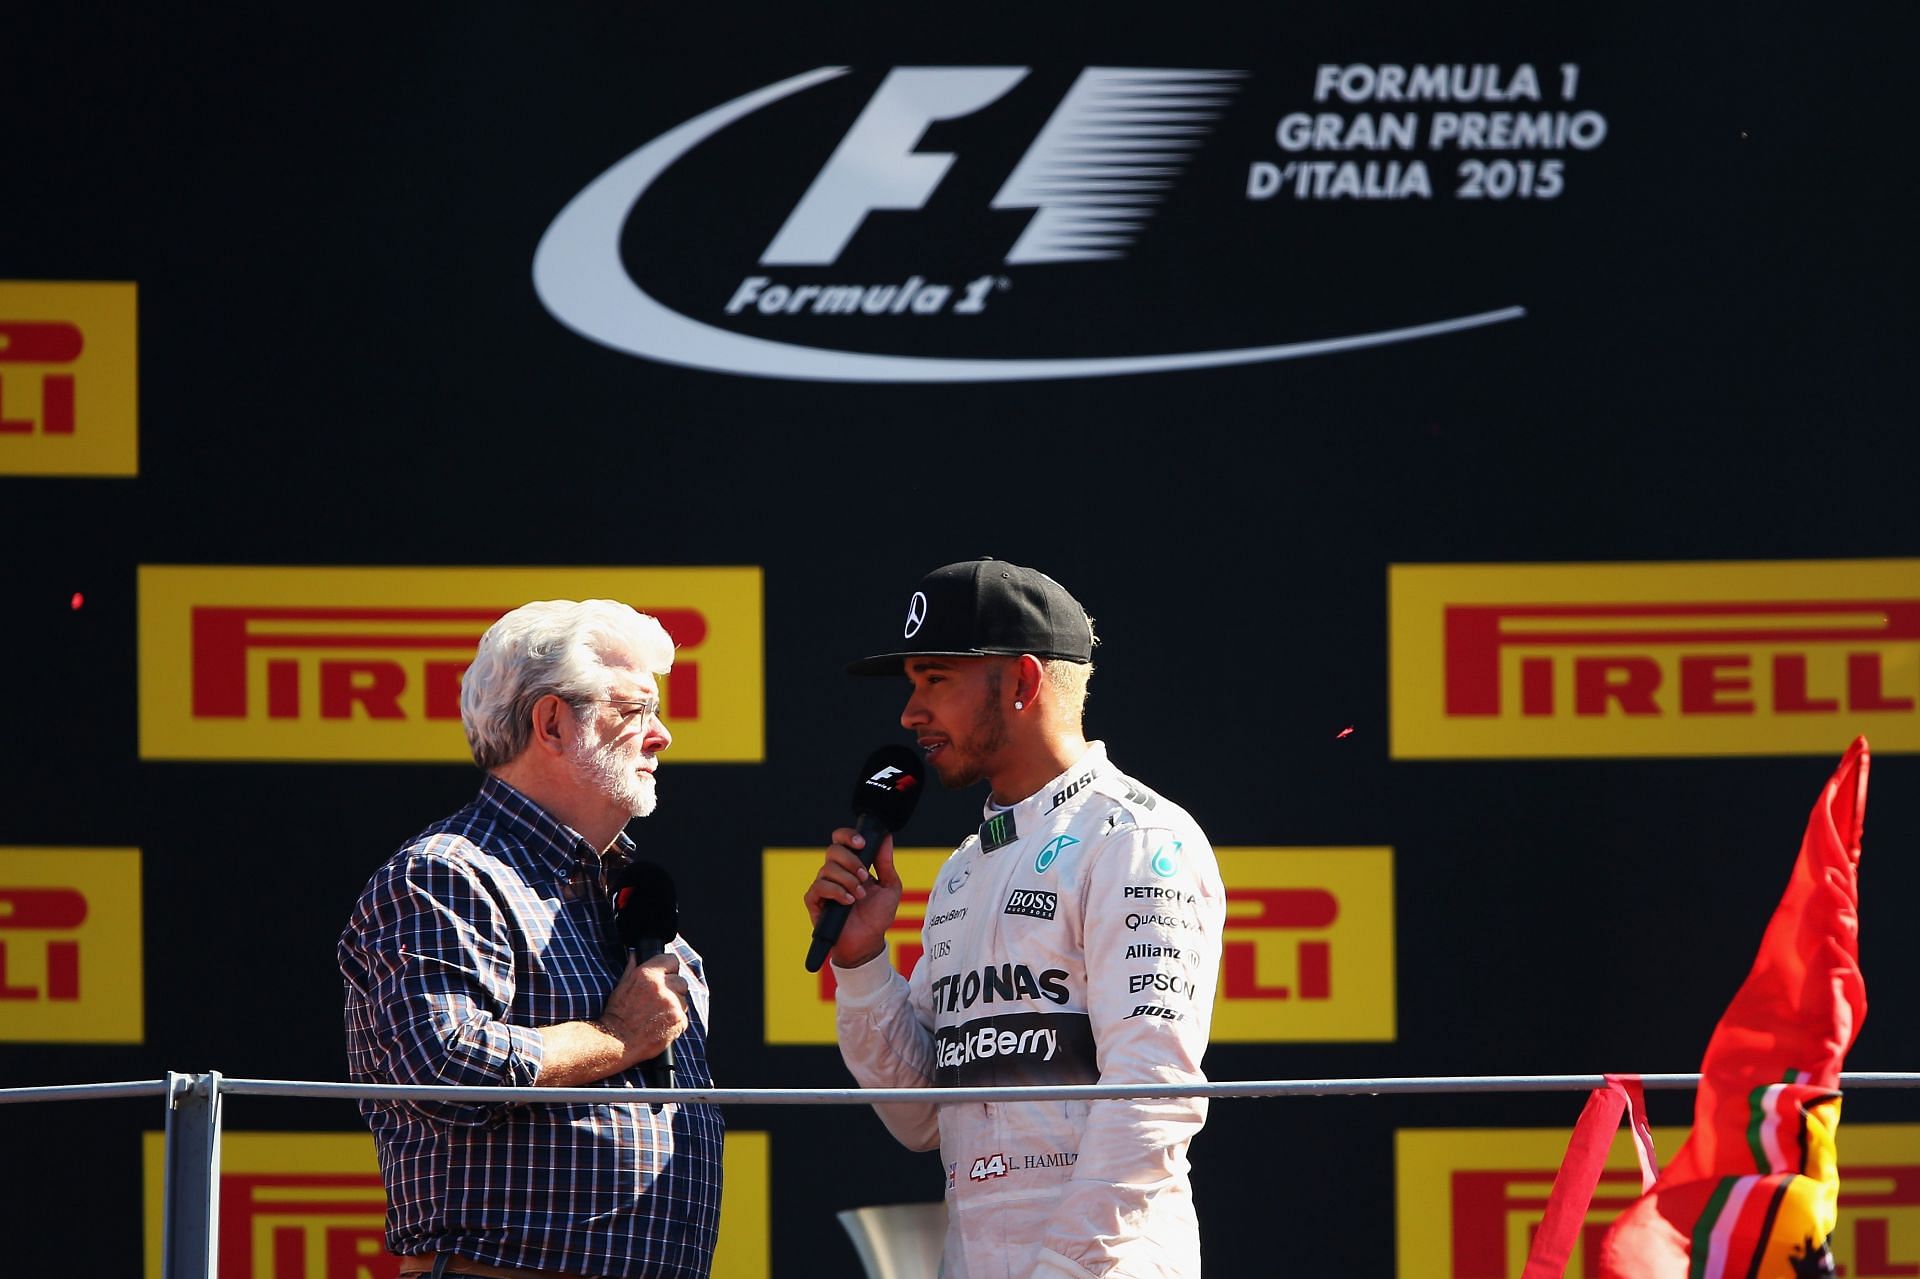 2015 F1 Grand Prix of Italy - George Lucas interviews Lewis Hamilton